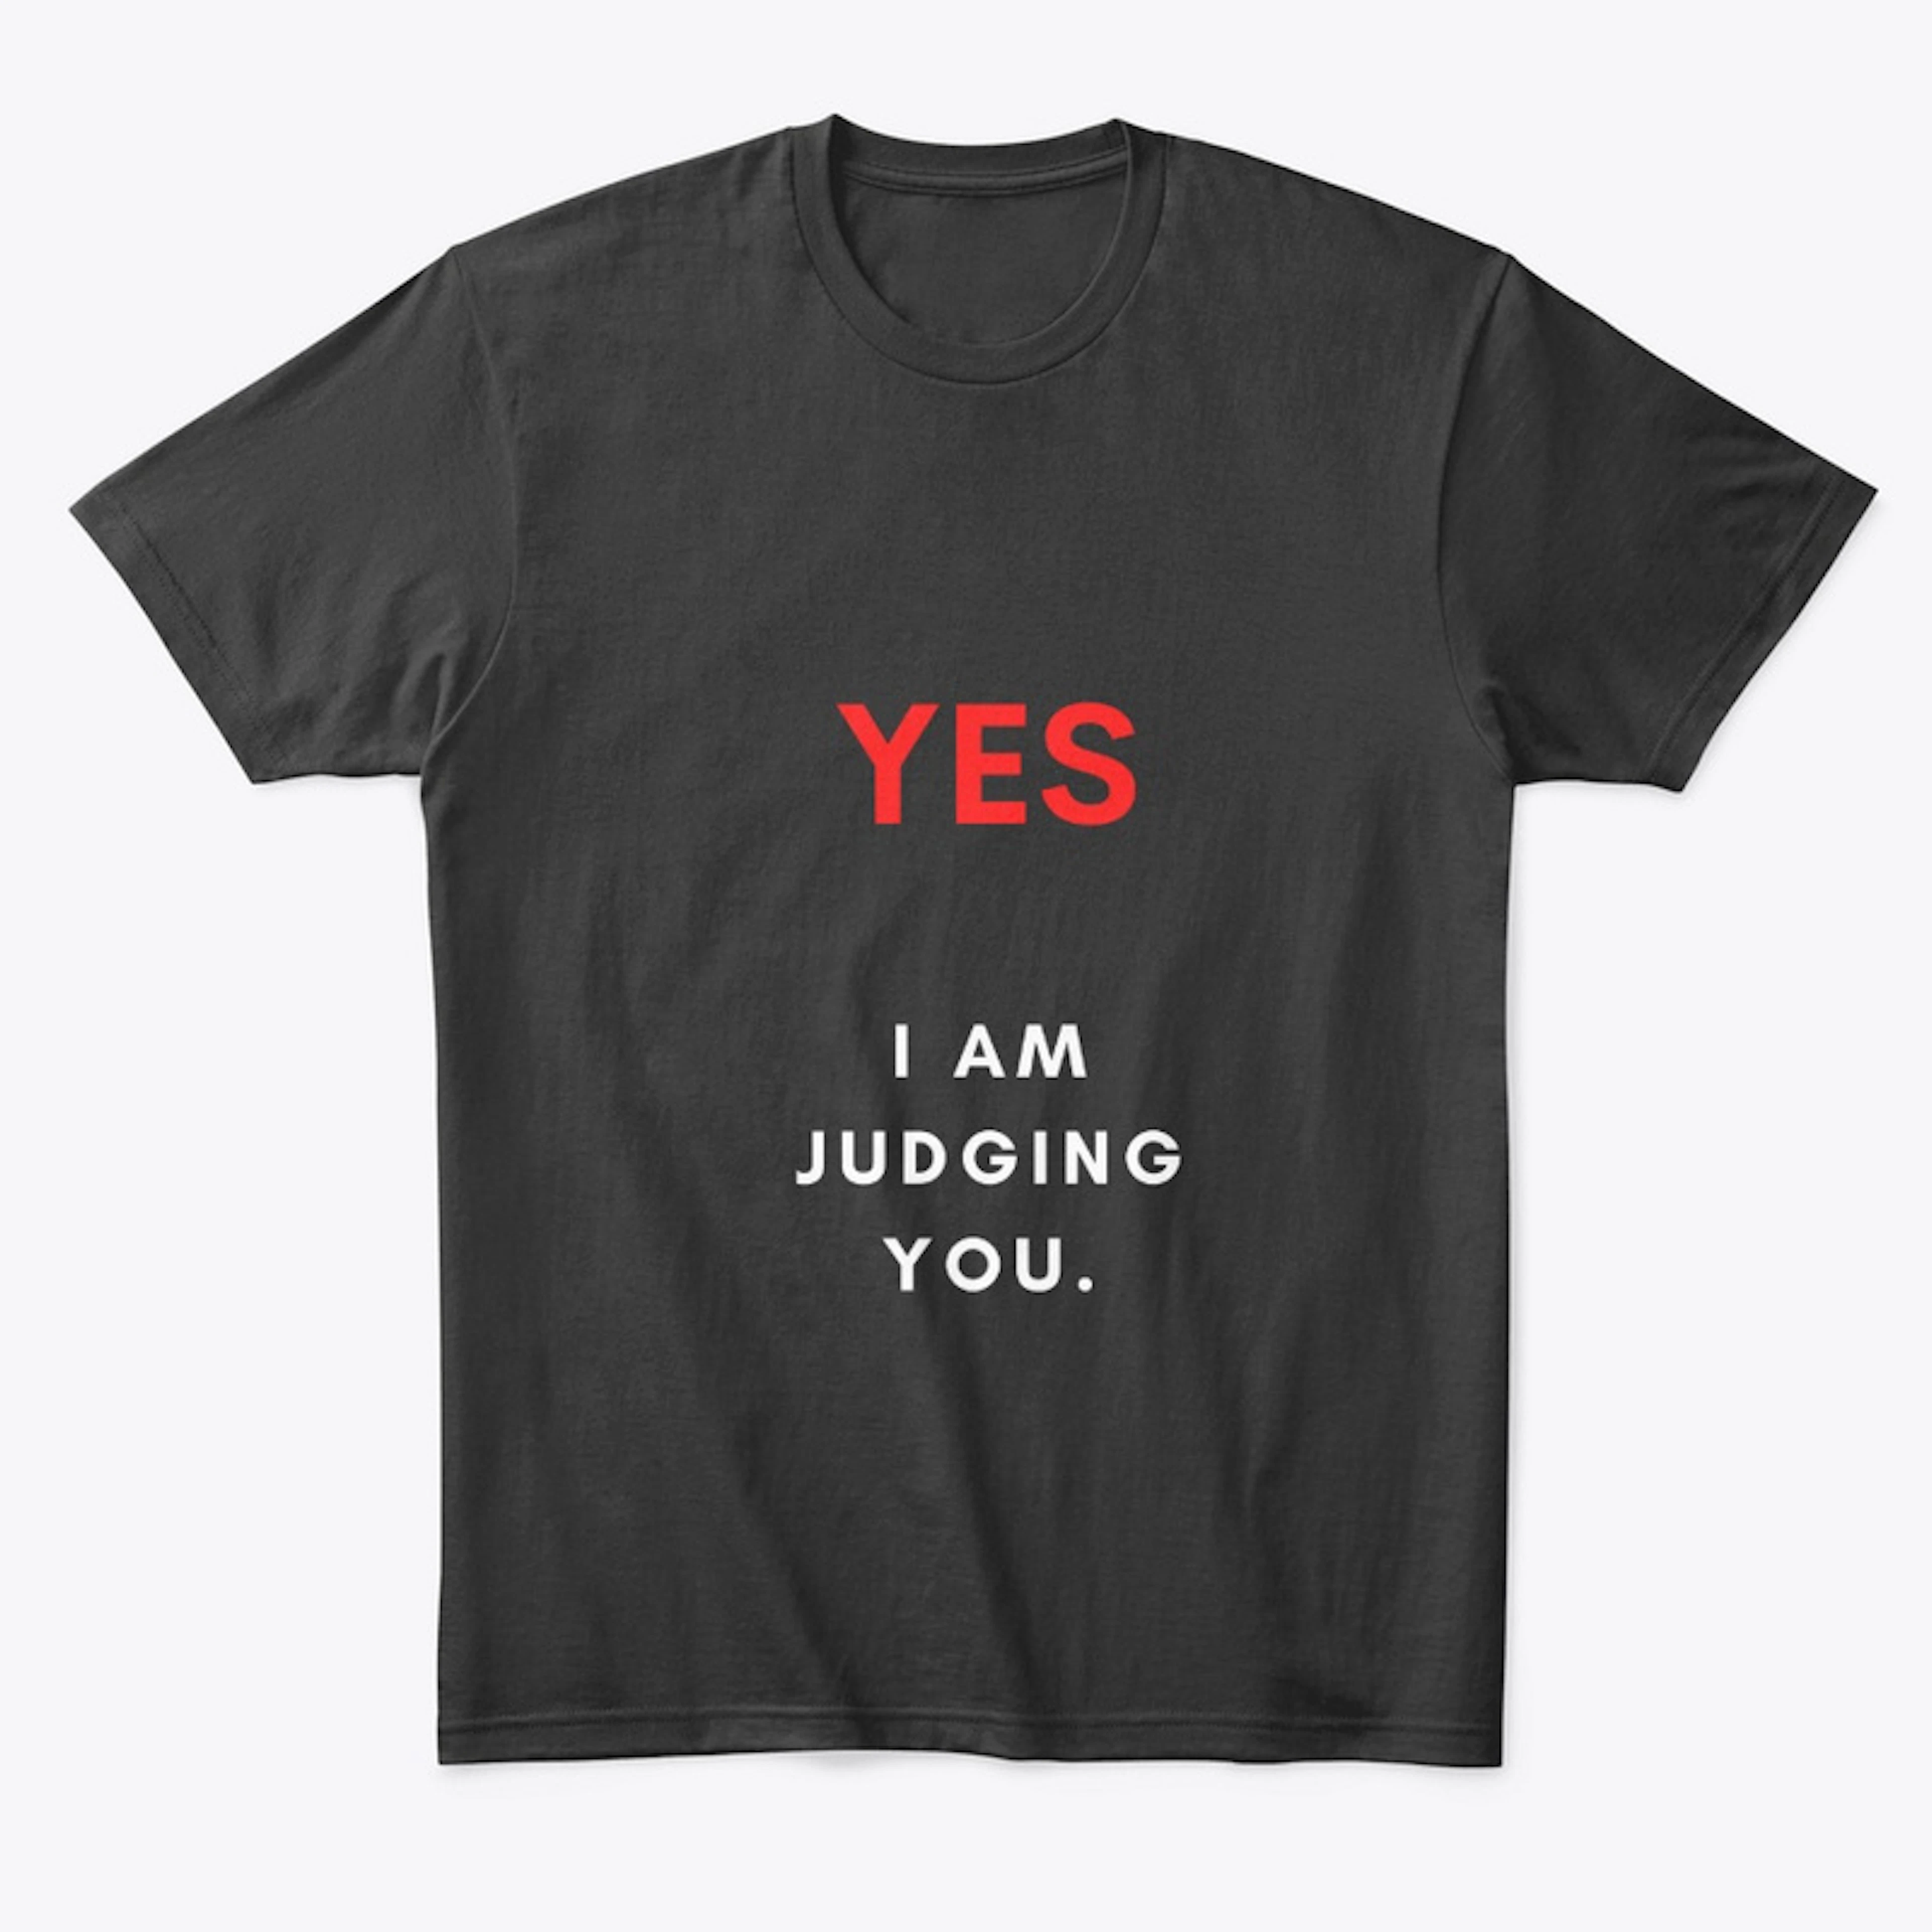 judging you